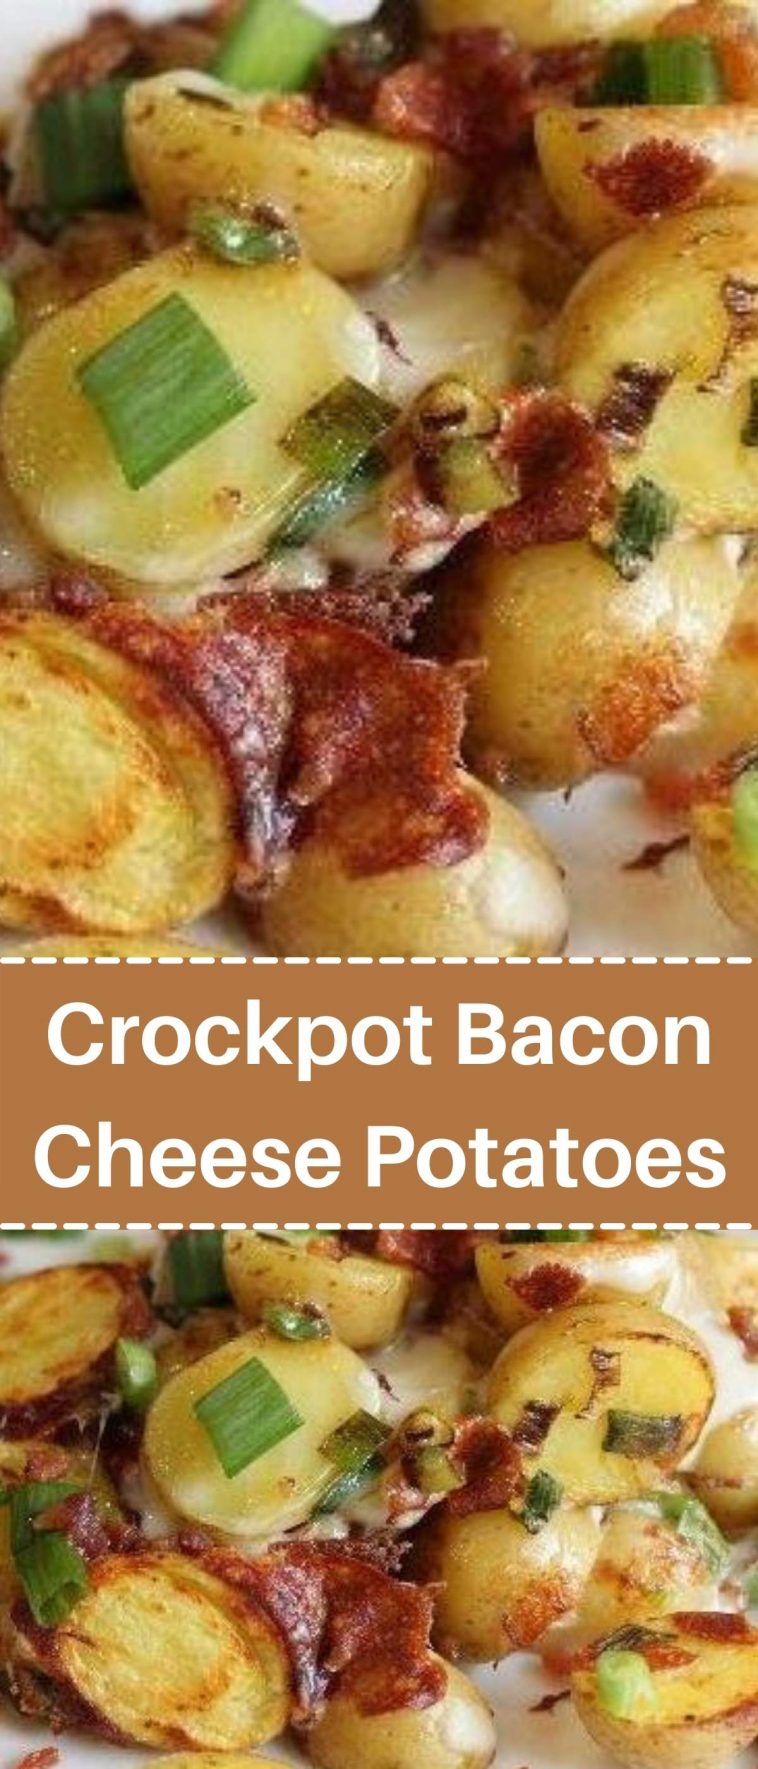 Crockpot Bacon Cheese Potatoes